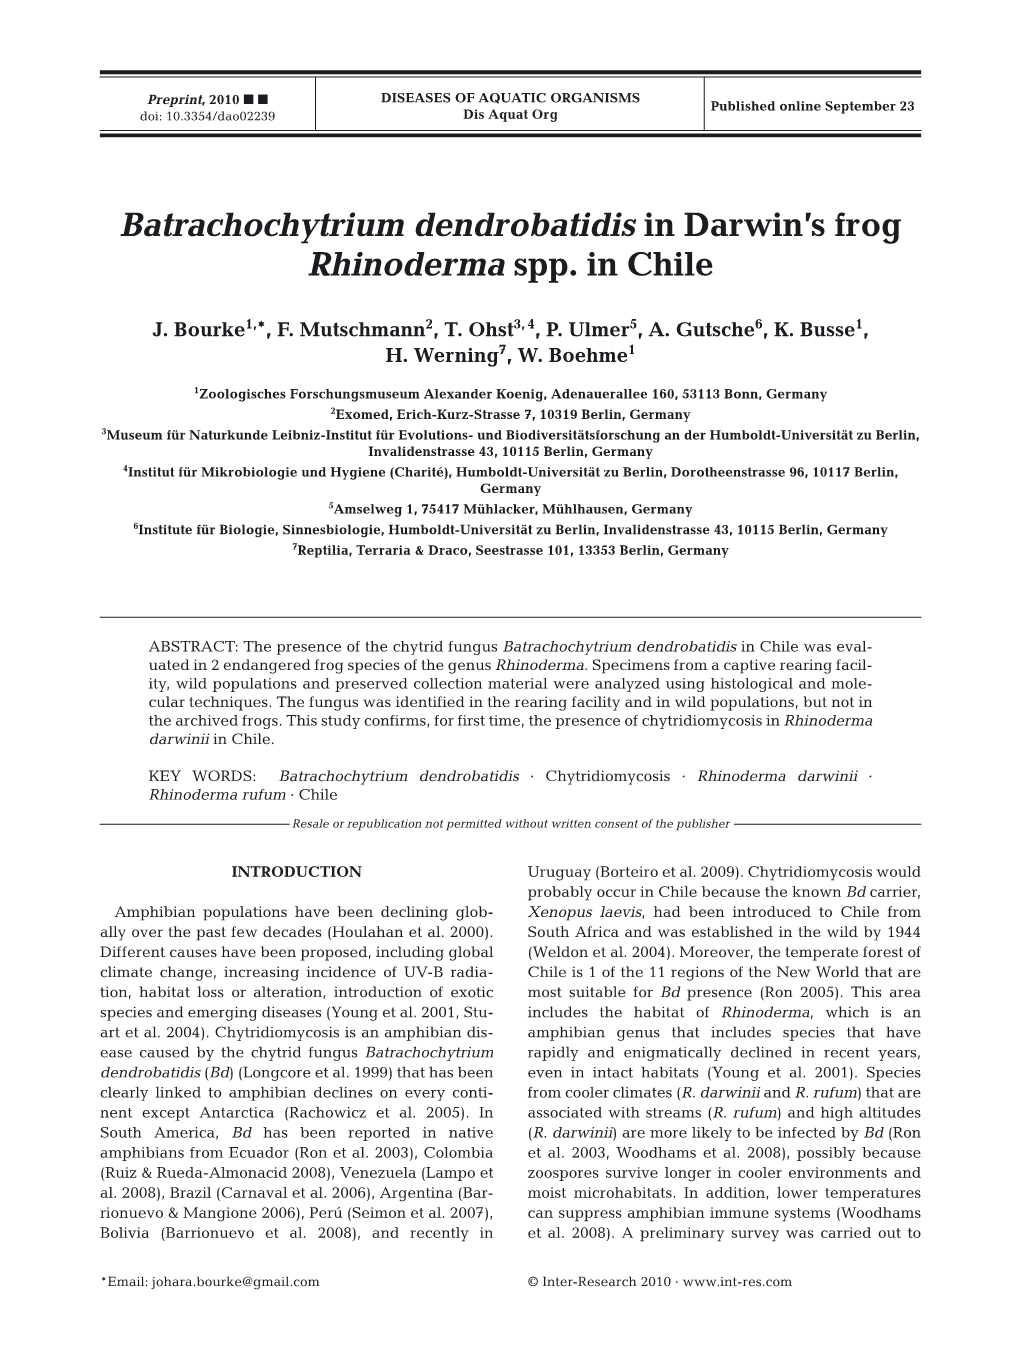 Batrachochytrium Dendrobatidis in Darwin's Frog Rhinoderma Spp. In